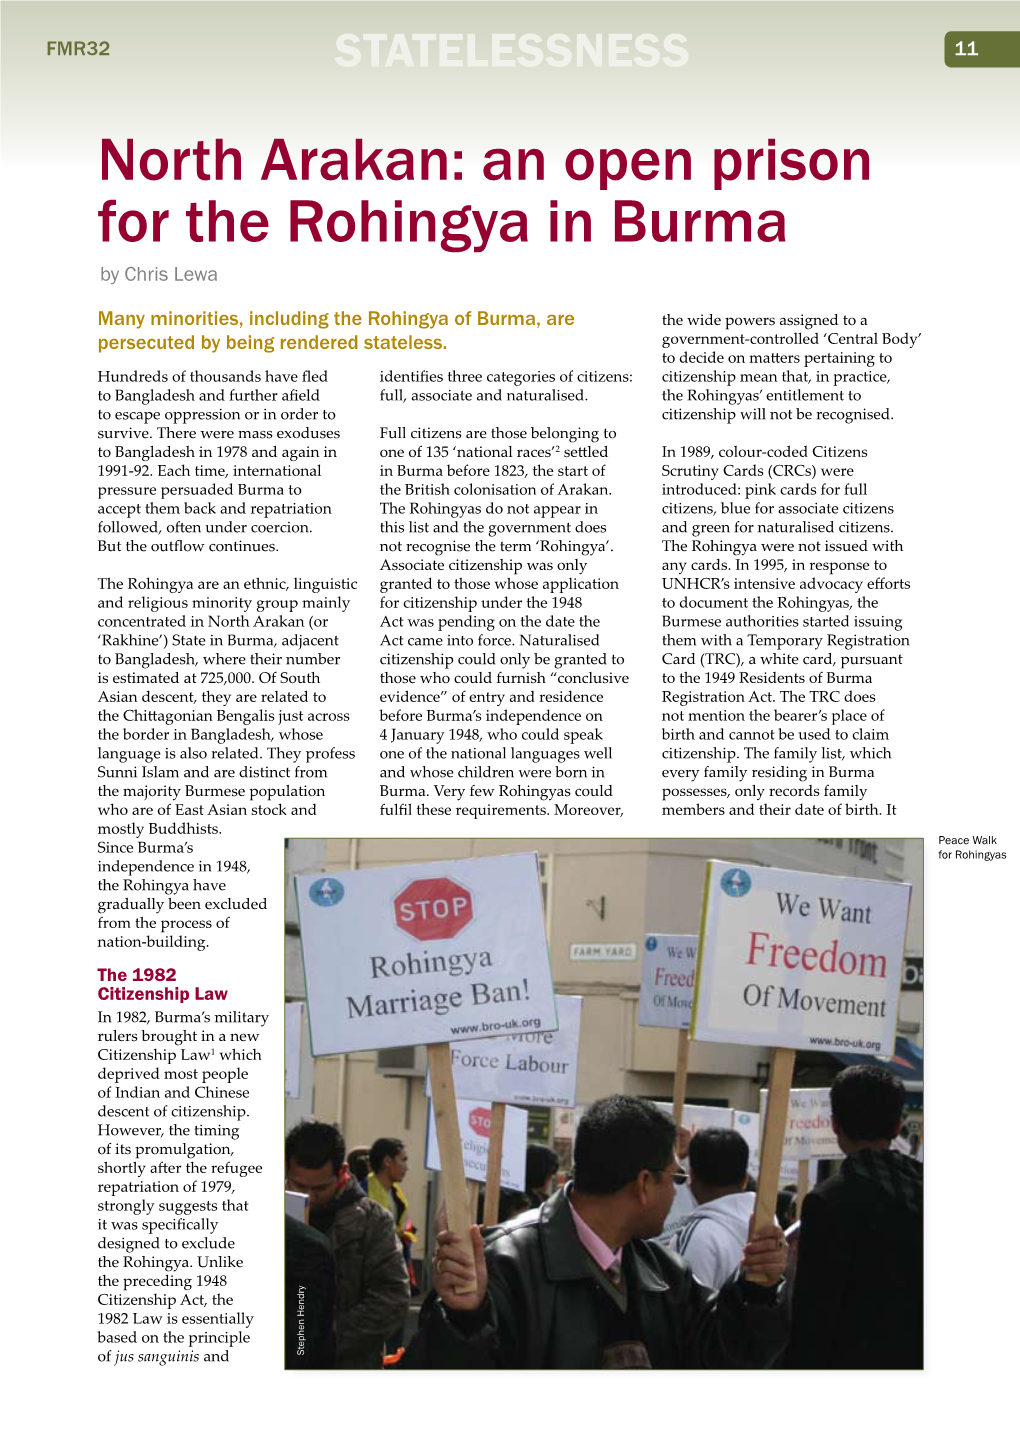 North Arakan: an Open Prison for the Rohingya in Burma by Chris Lewa